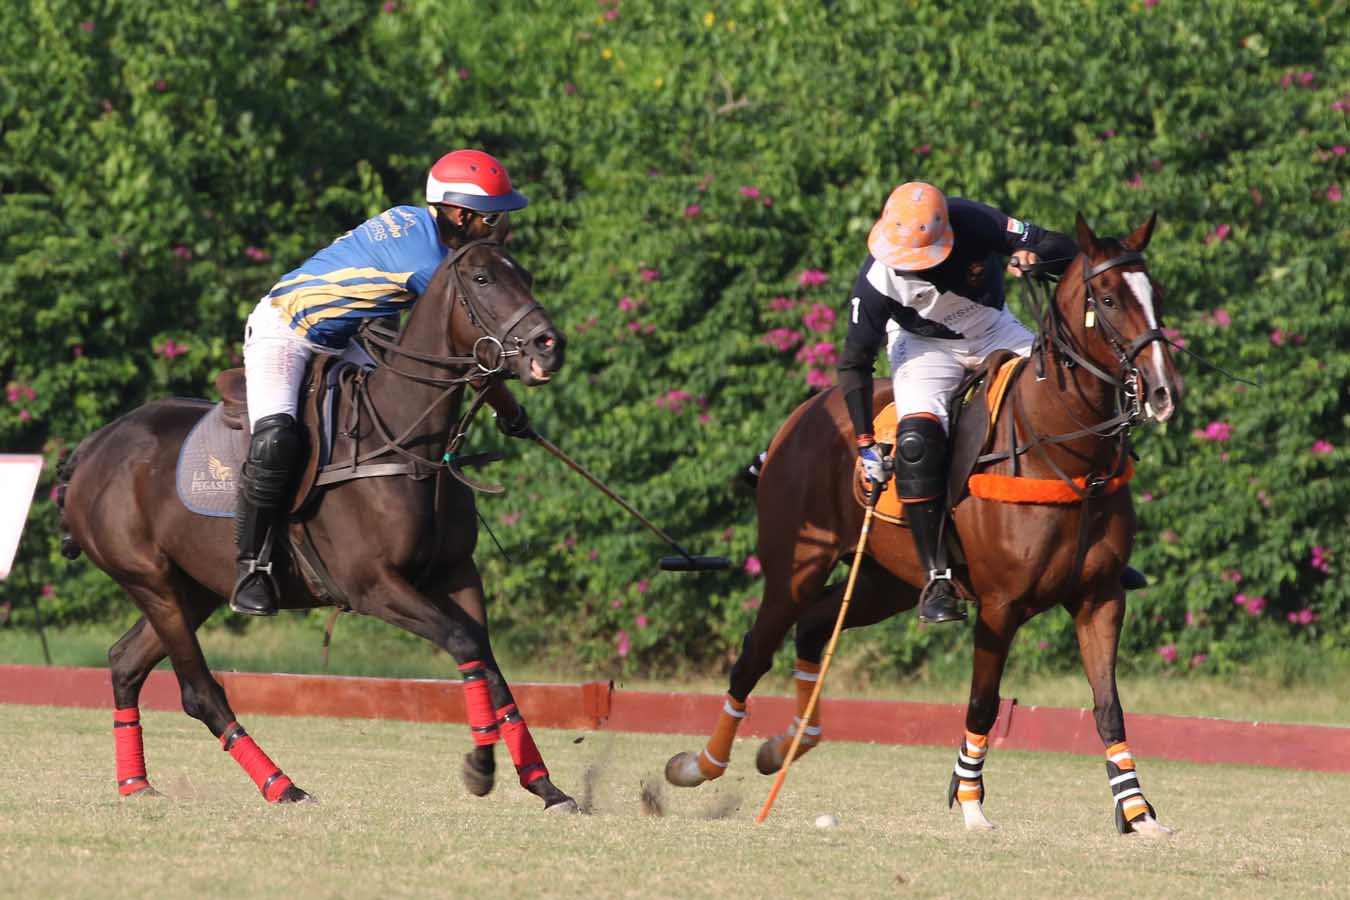 Jaipur polo season 2019